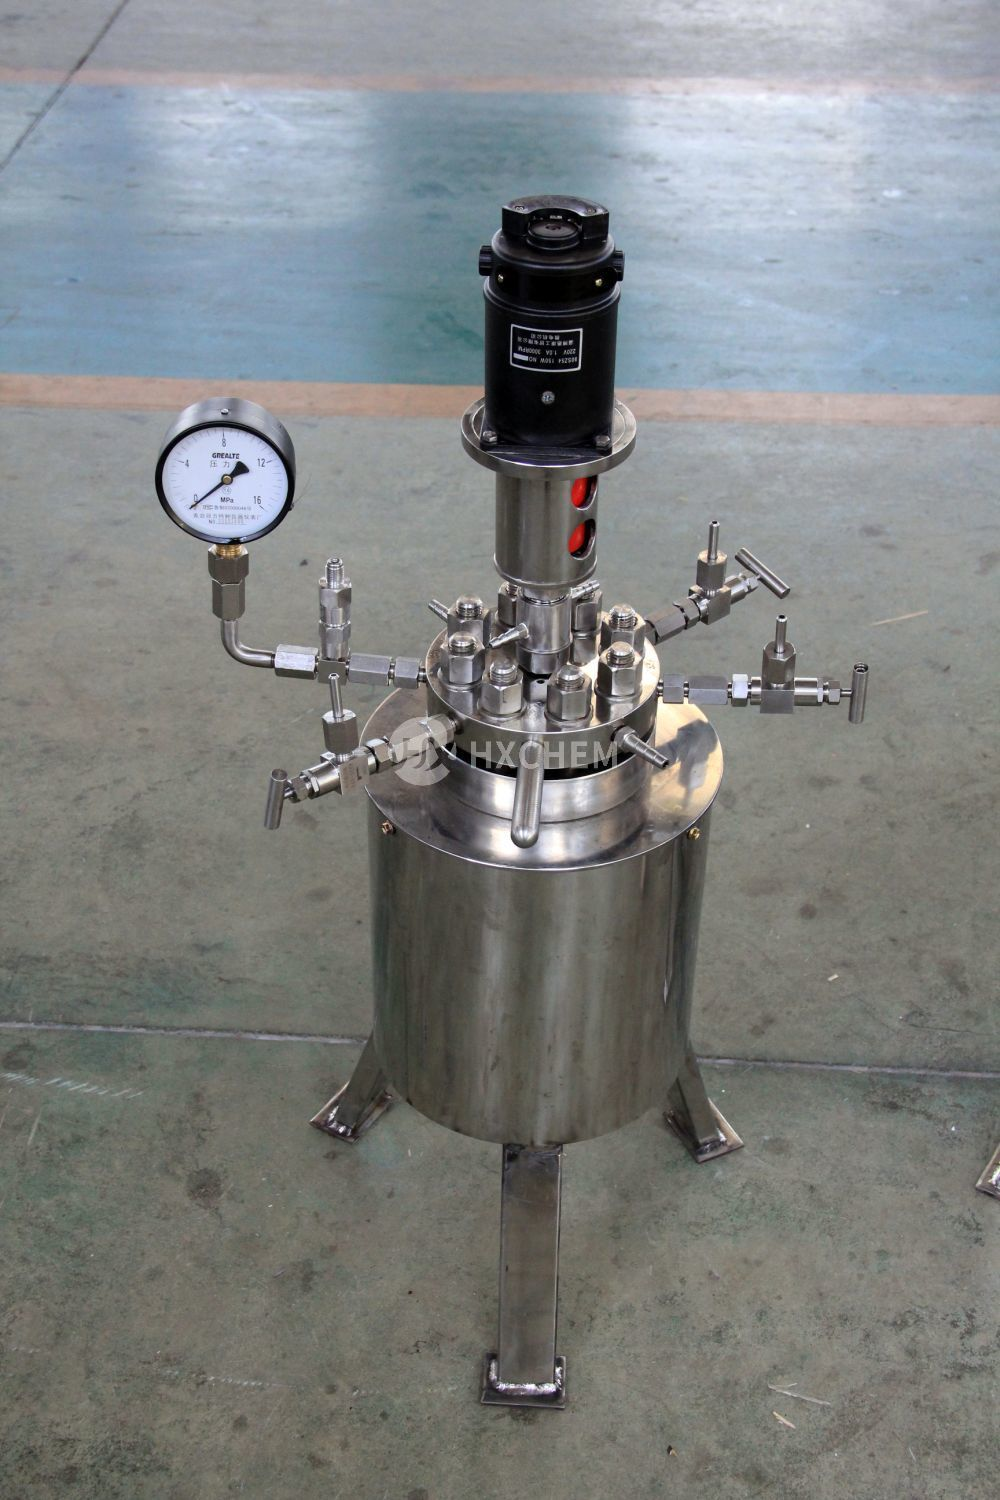 Lab pressure reactors